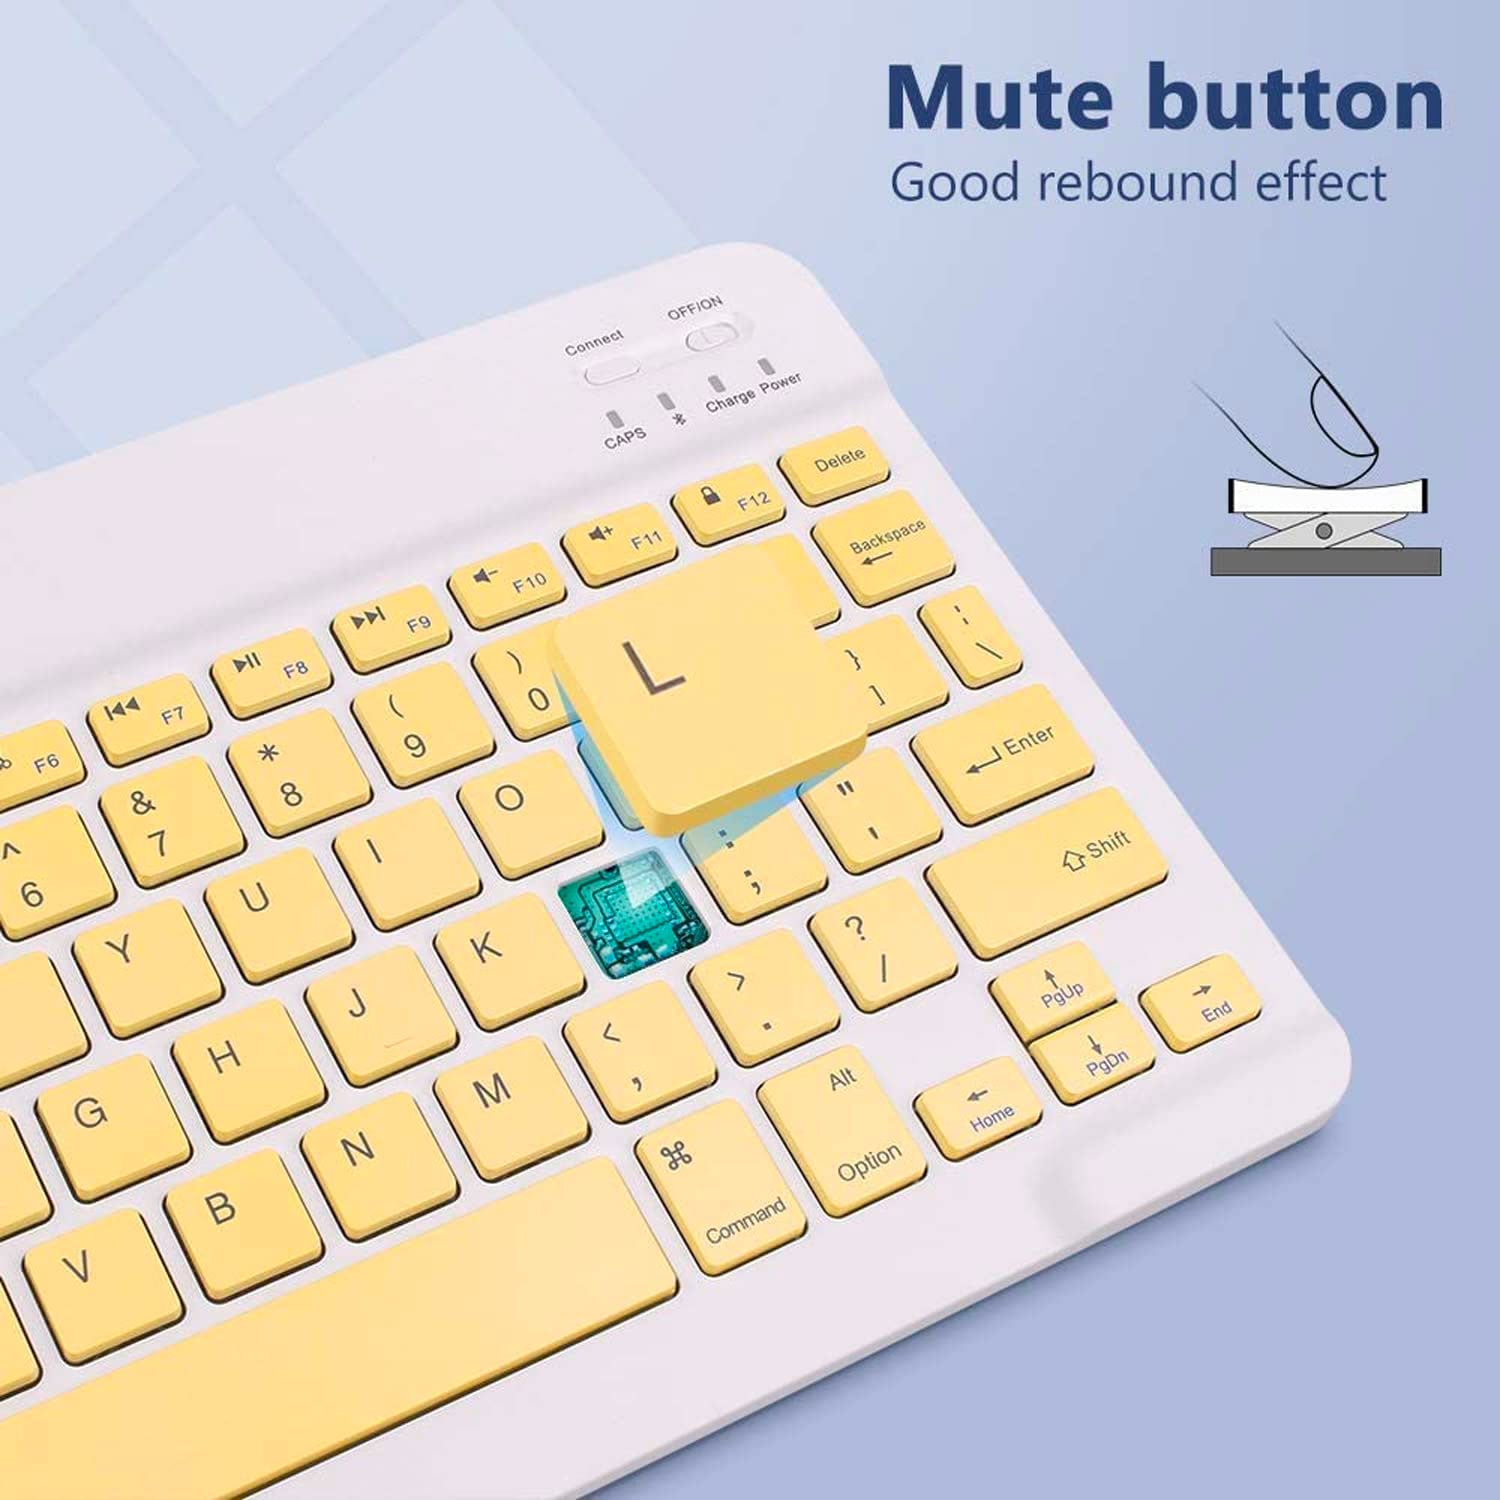 PTC Select iPad Air 4 / Air 5 10.9" Wireless Bluetooth Keyboard Smart Cover